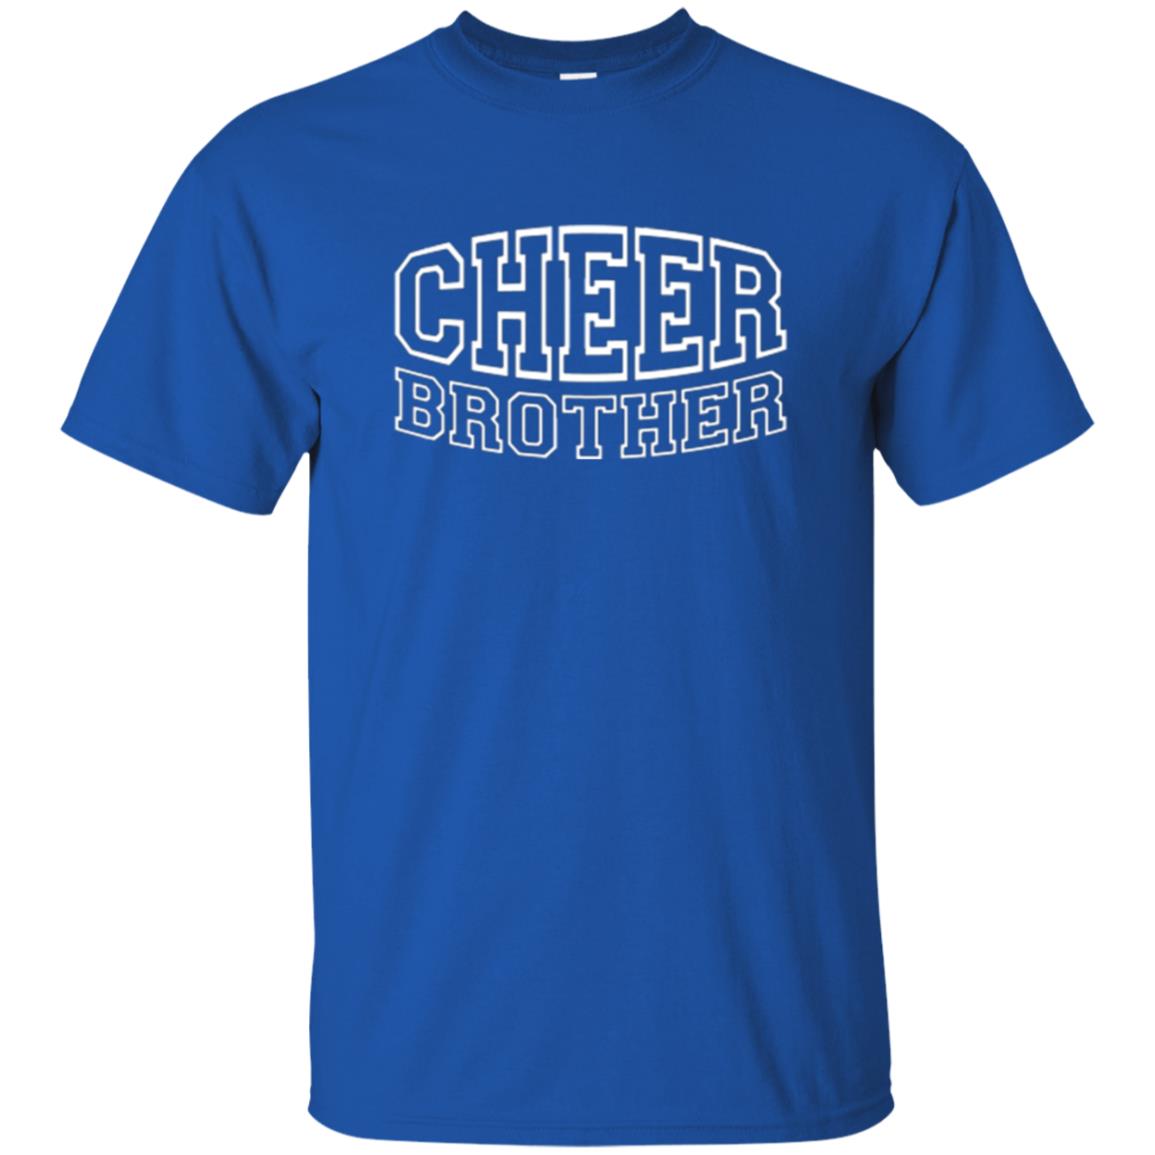 Cheer Brother Shirt - 10% Off - FavorMerch